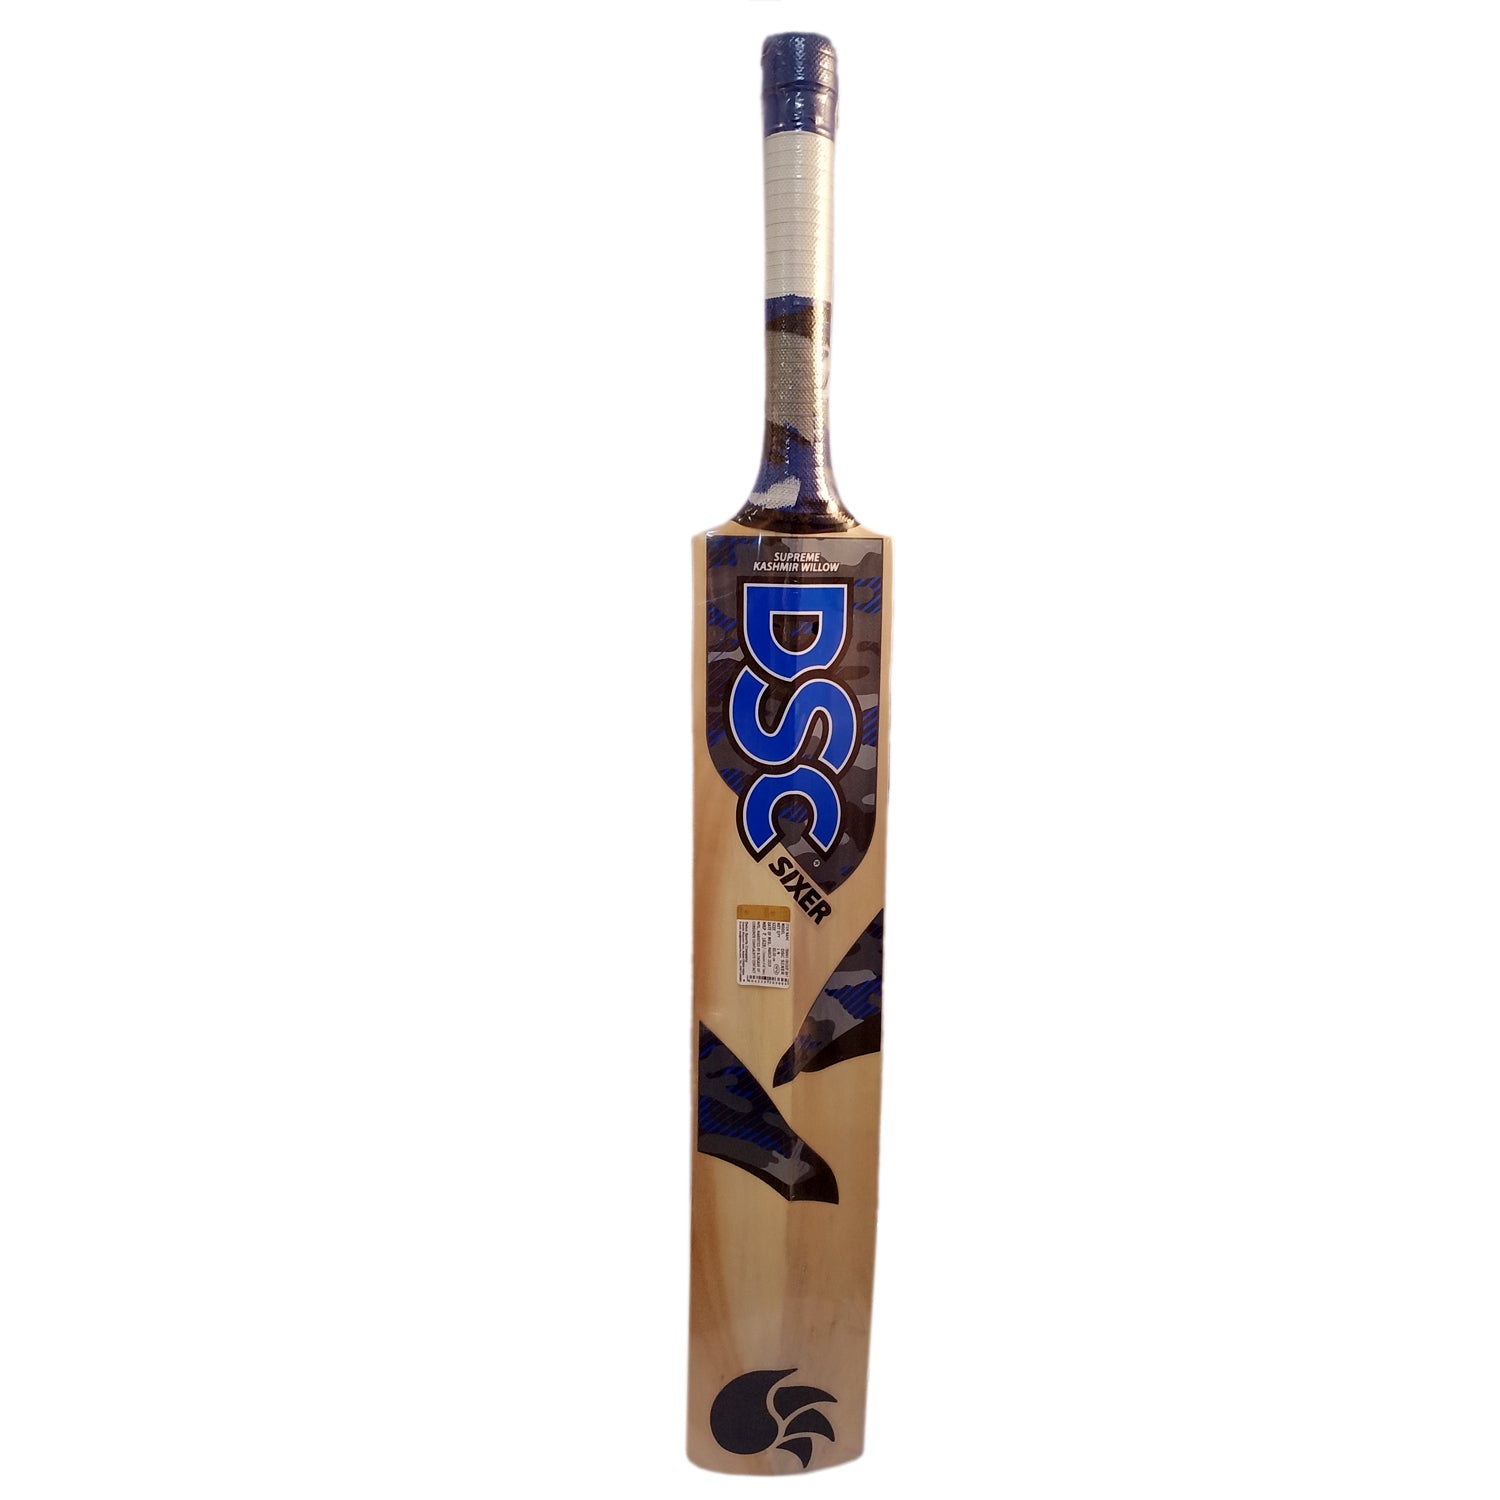 DSC Sixer Kashmir Willow Cricket Bat - Best Price online Prokicksports.com